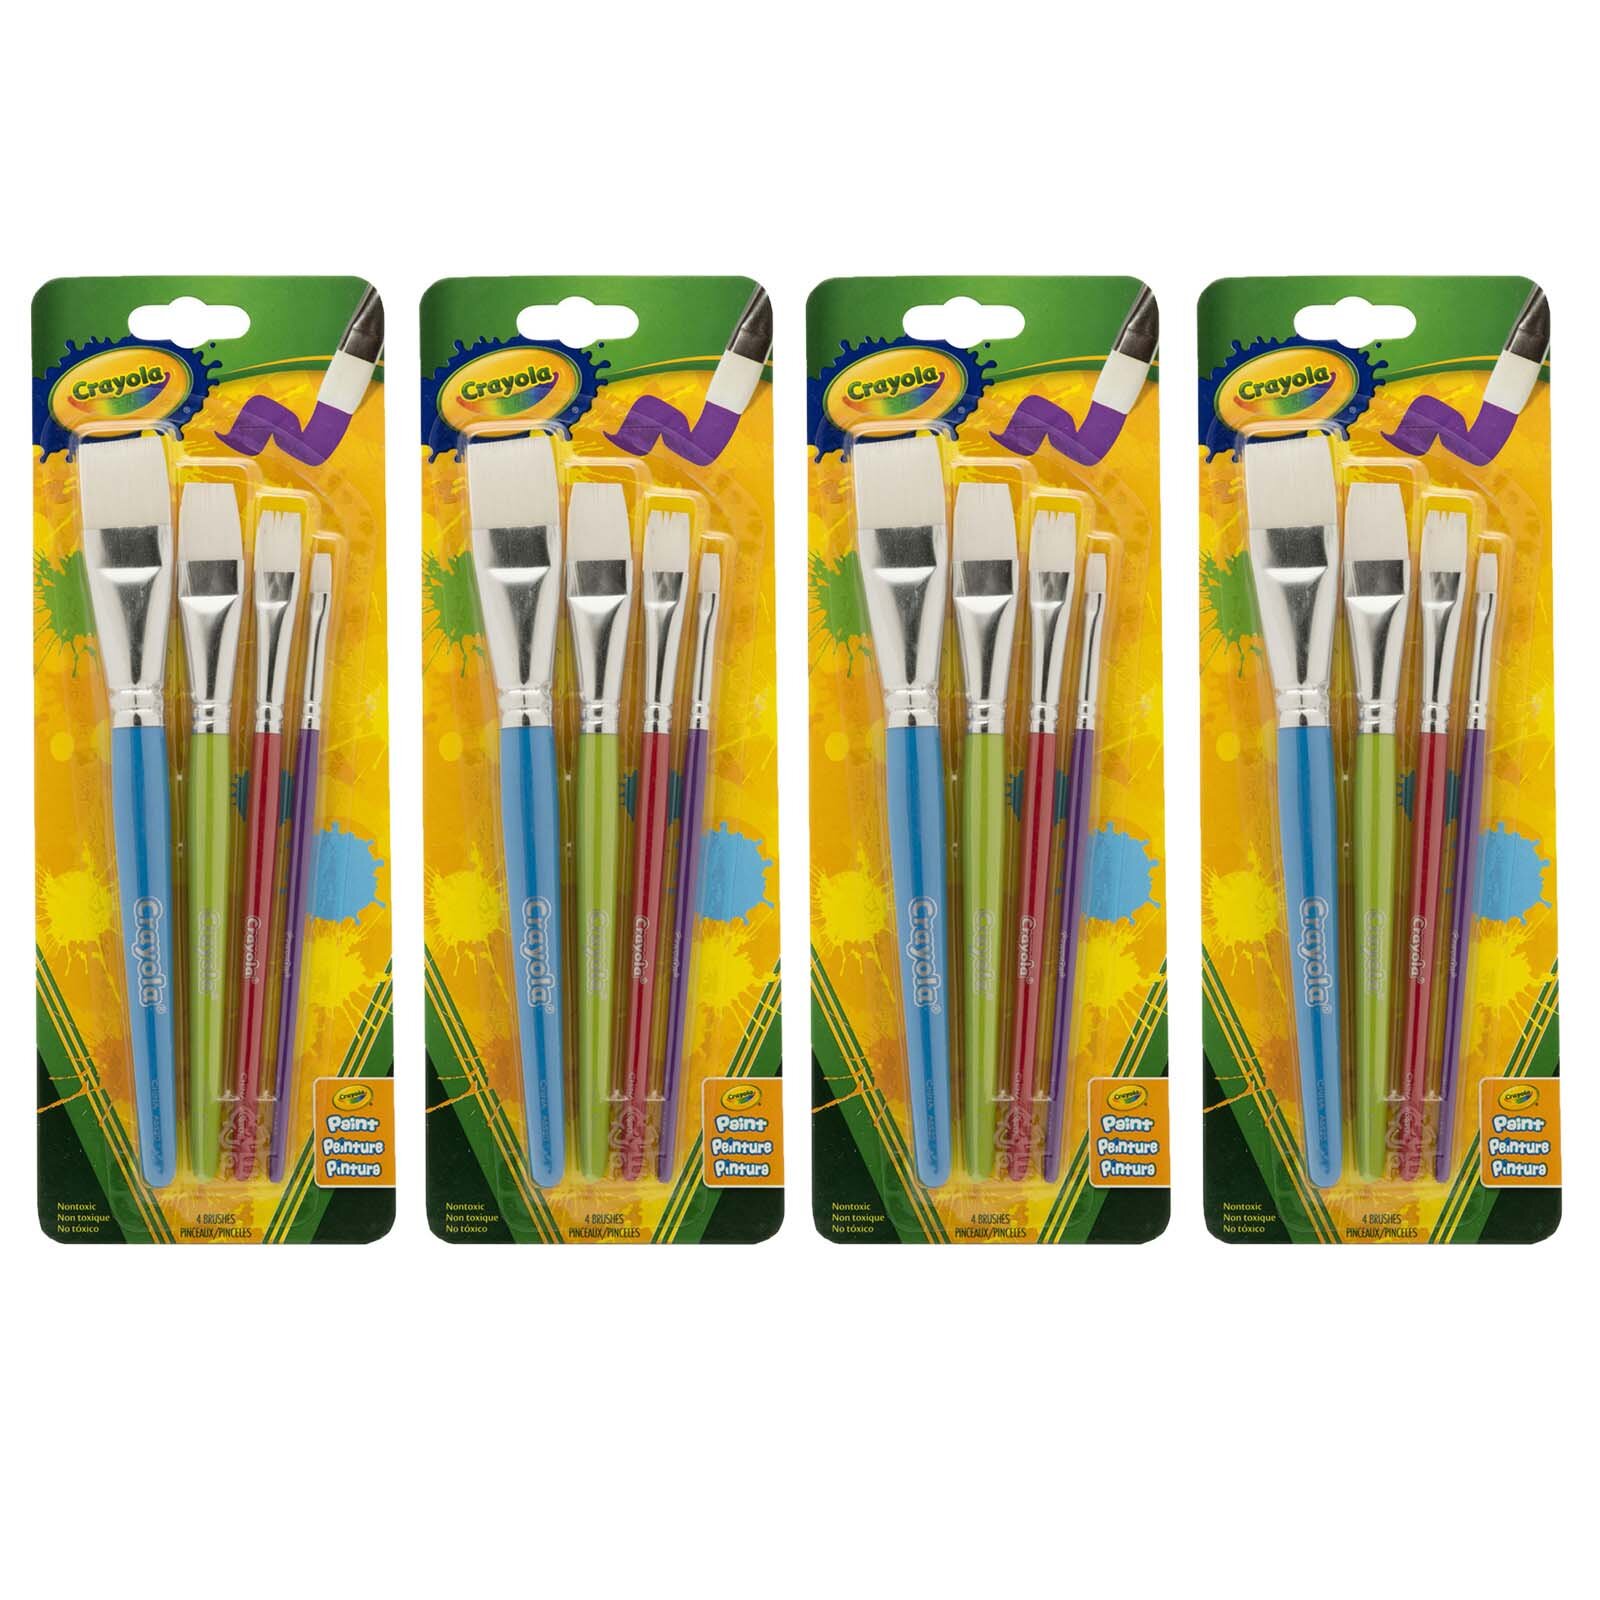 Crayola Kids Paint Brushes, 4 Count, Washable Paint, Tempera Paint